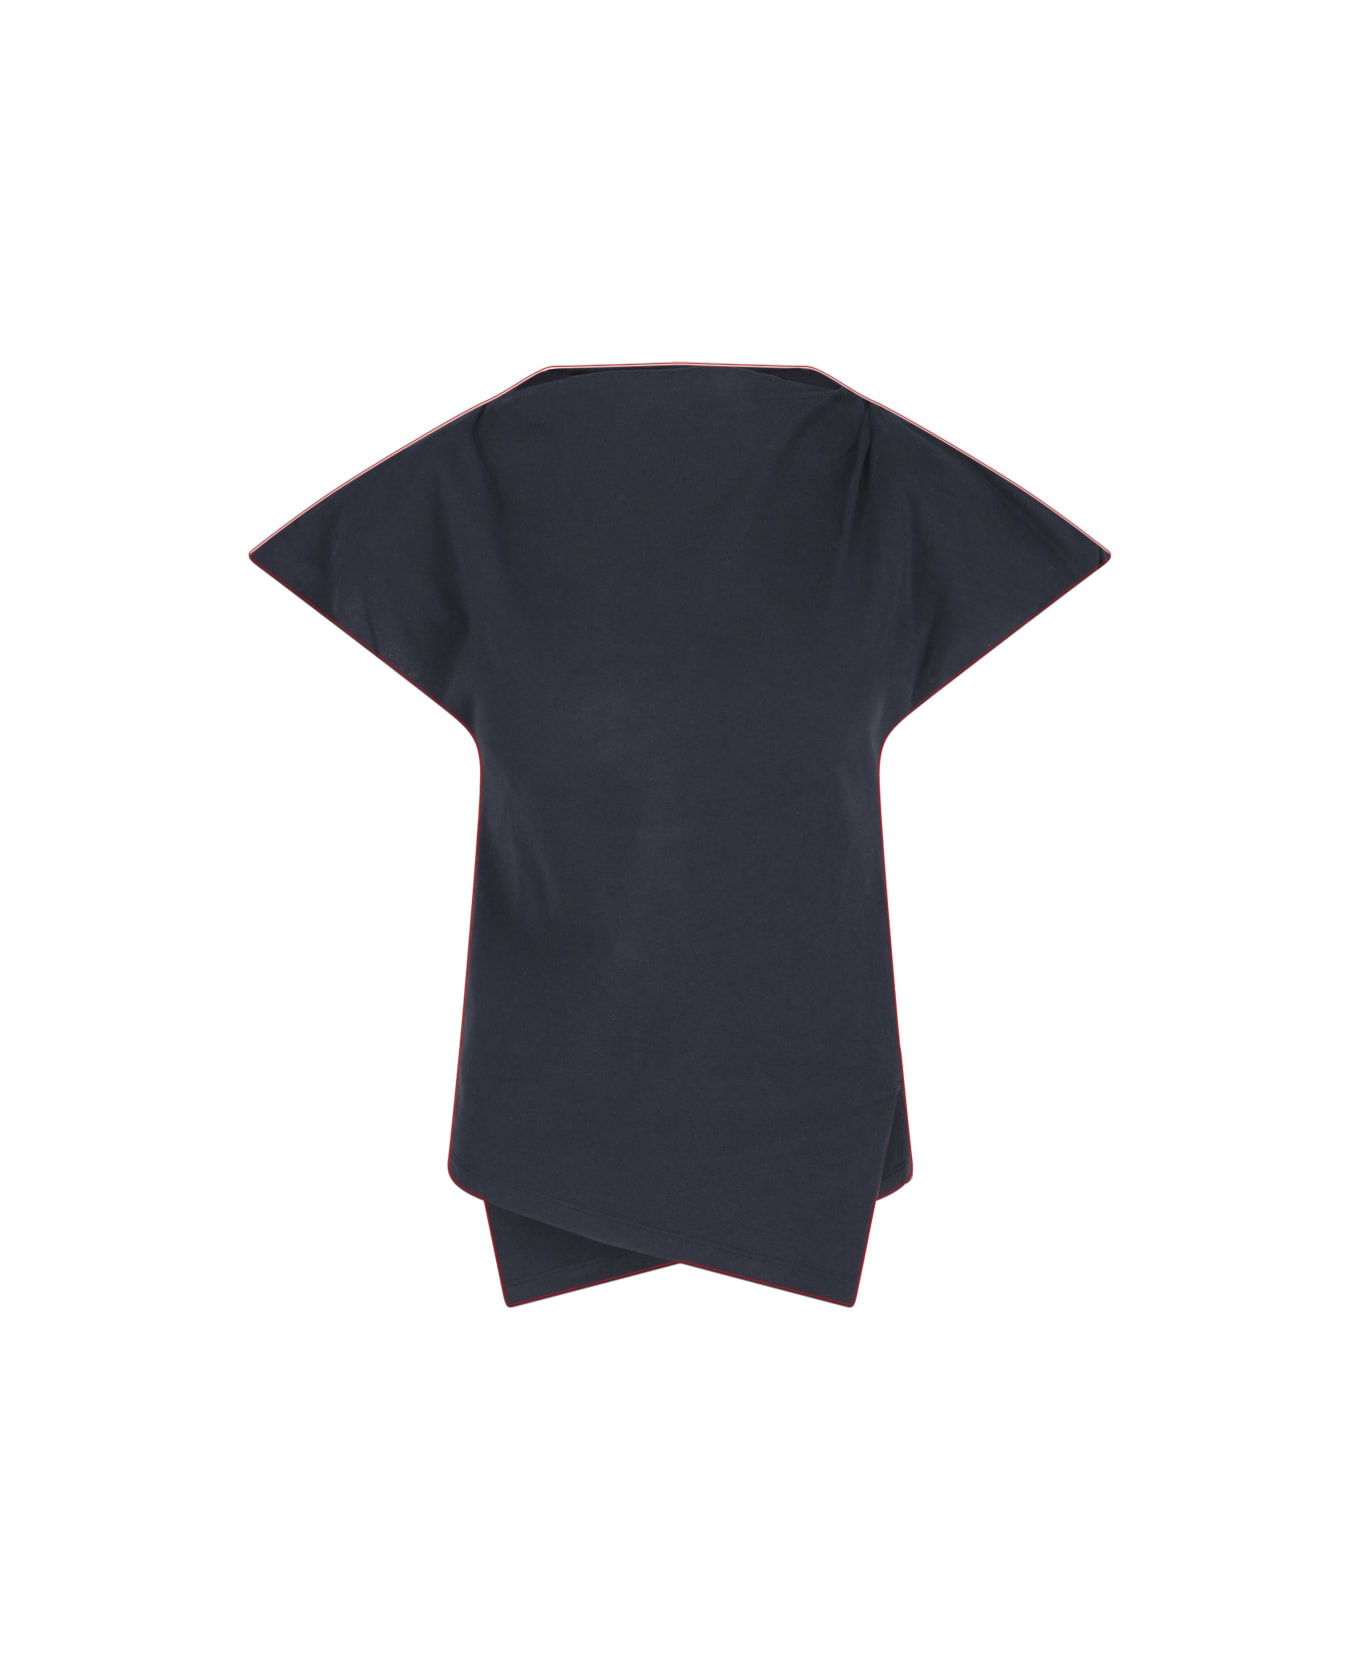 Isabel Marant 'sebani' T-shirt - Black   Tシャツ